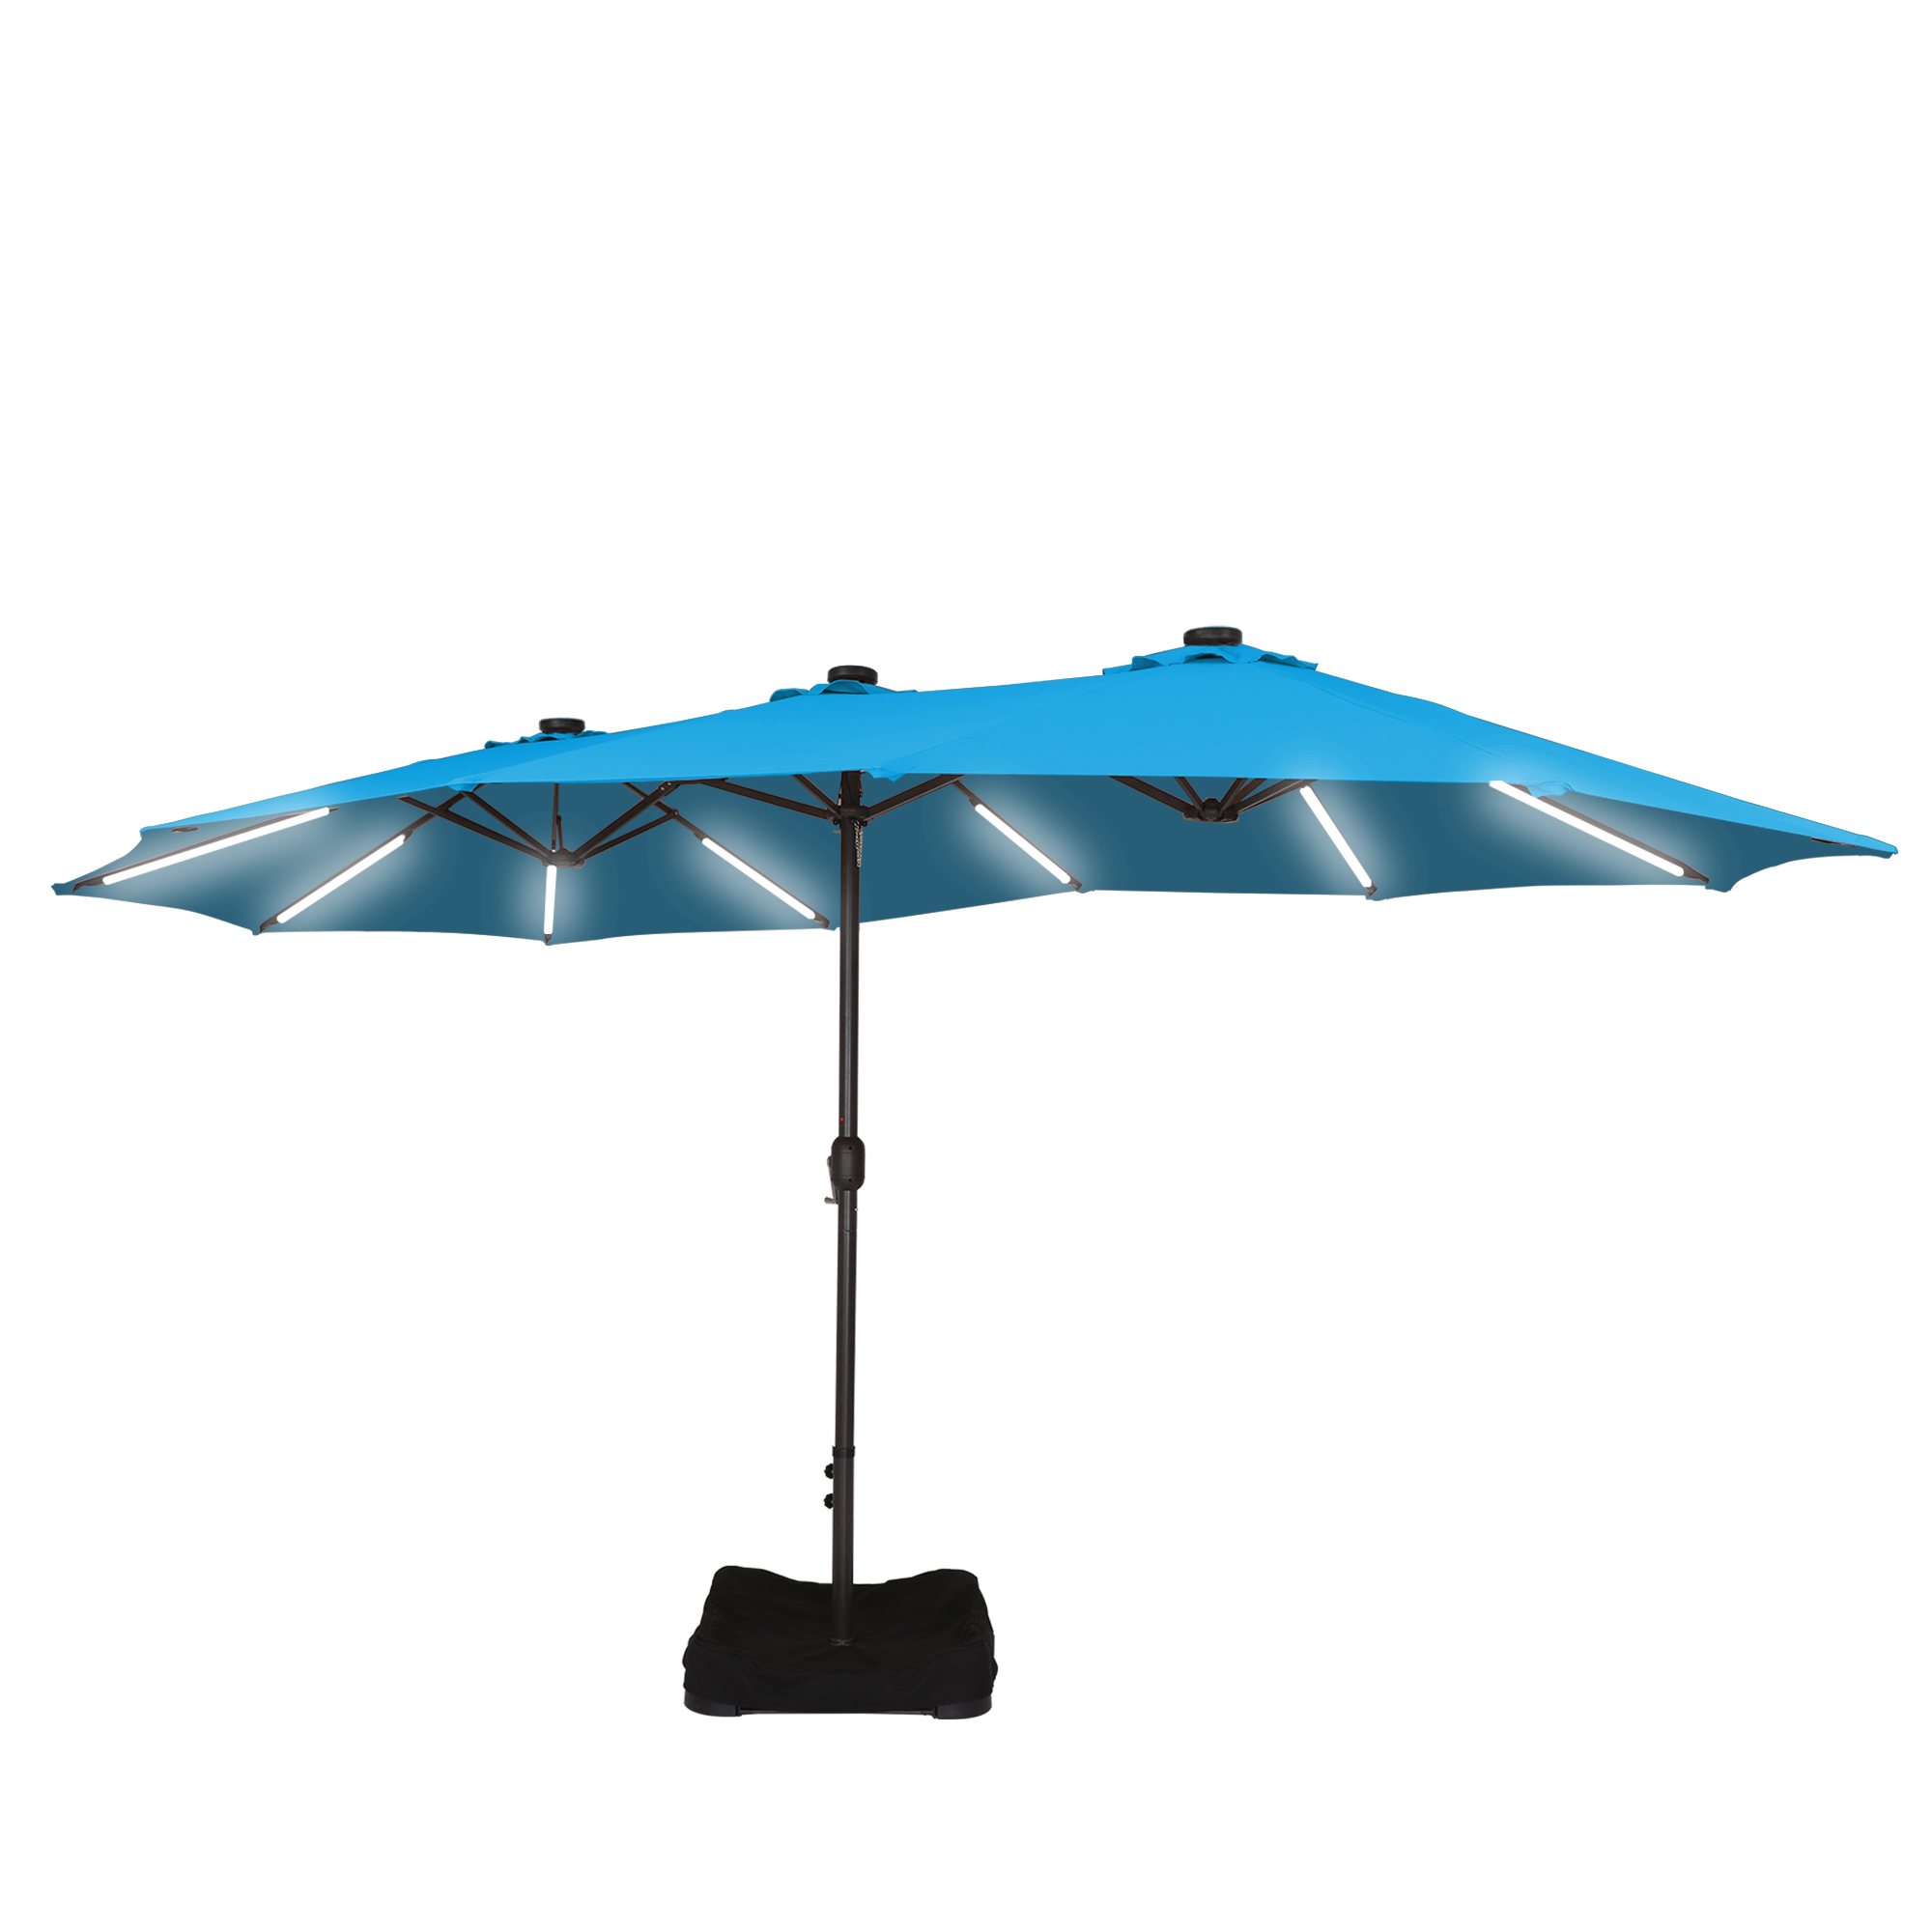 15 FT Patio Market Umbrella with Base and Solar LED Strip Lights shop product details tilting mechanisms